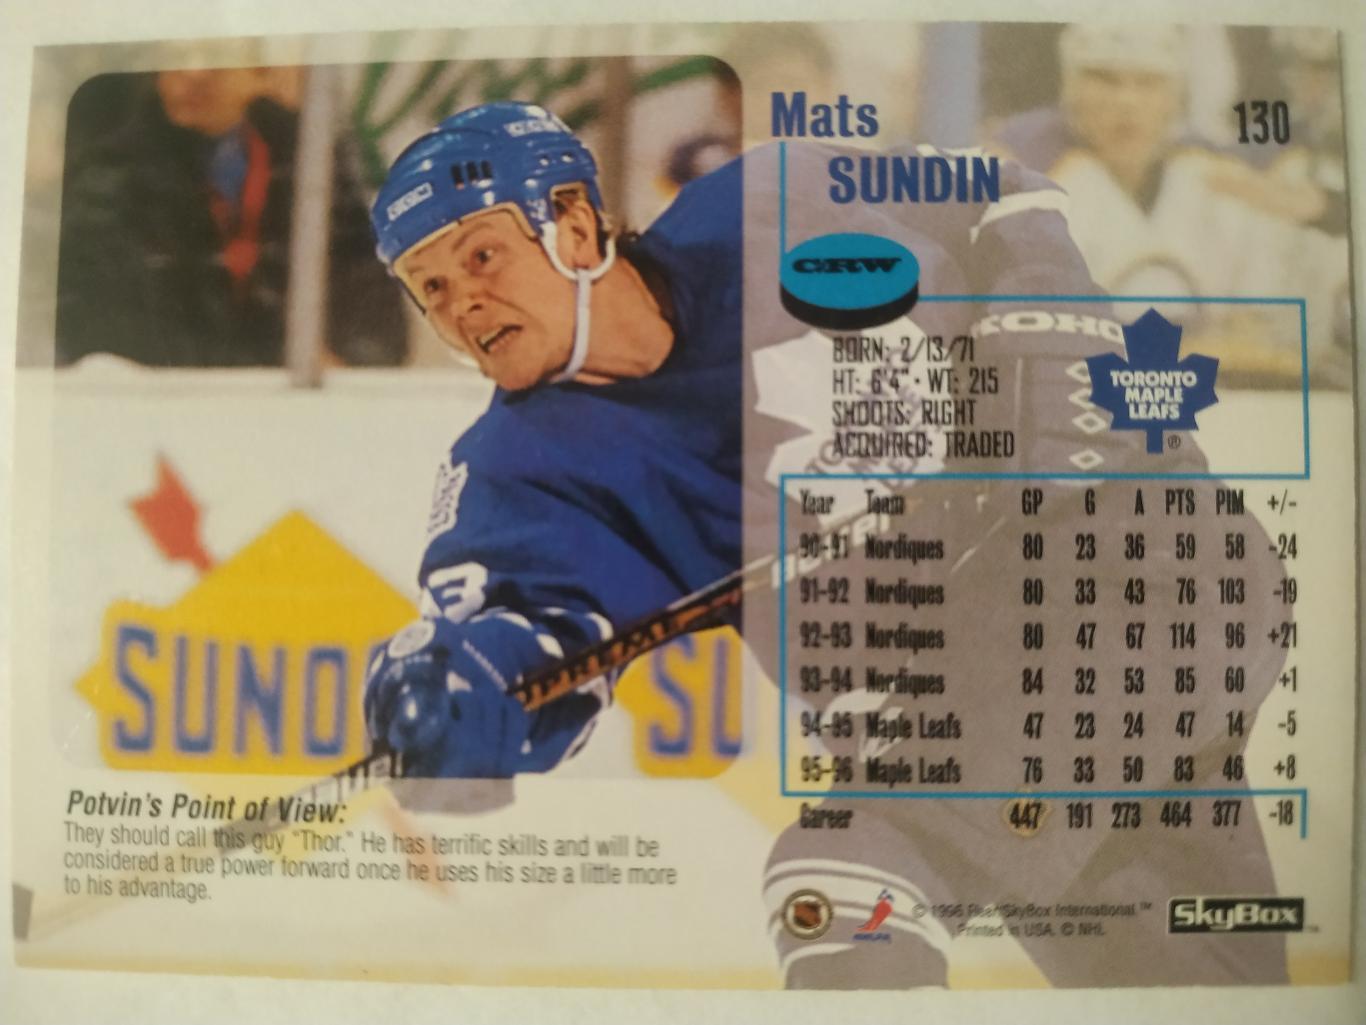 ХОККЕЙ КАРТОЧКА НХЛ IMPACT SKYBOX 1996-97 MATS SUNDIN TORONTO MAPLE LEAFS #130 1